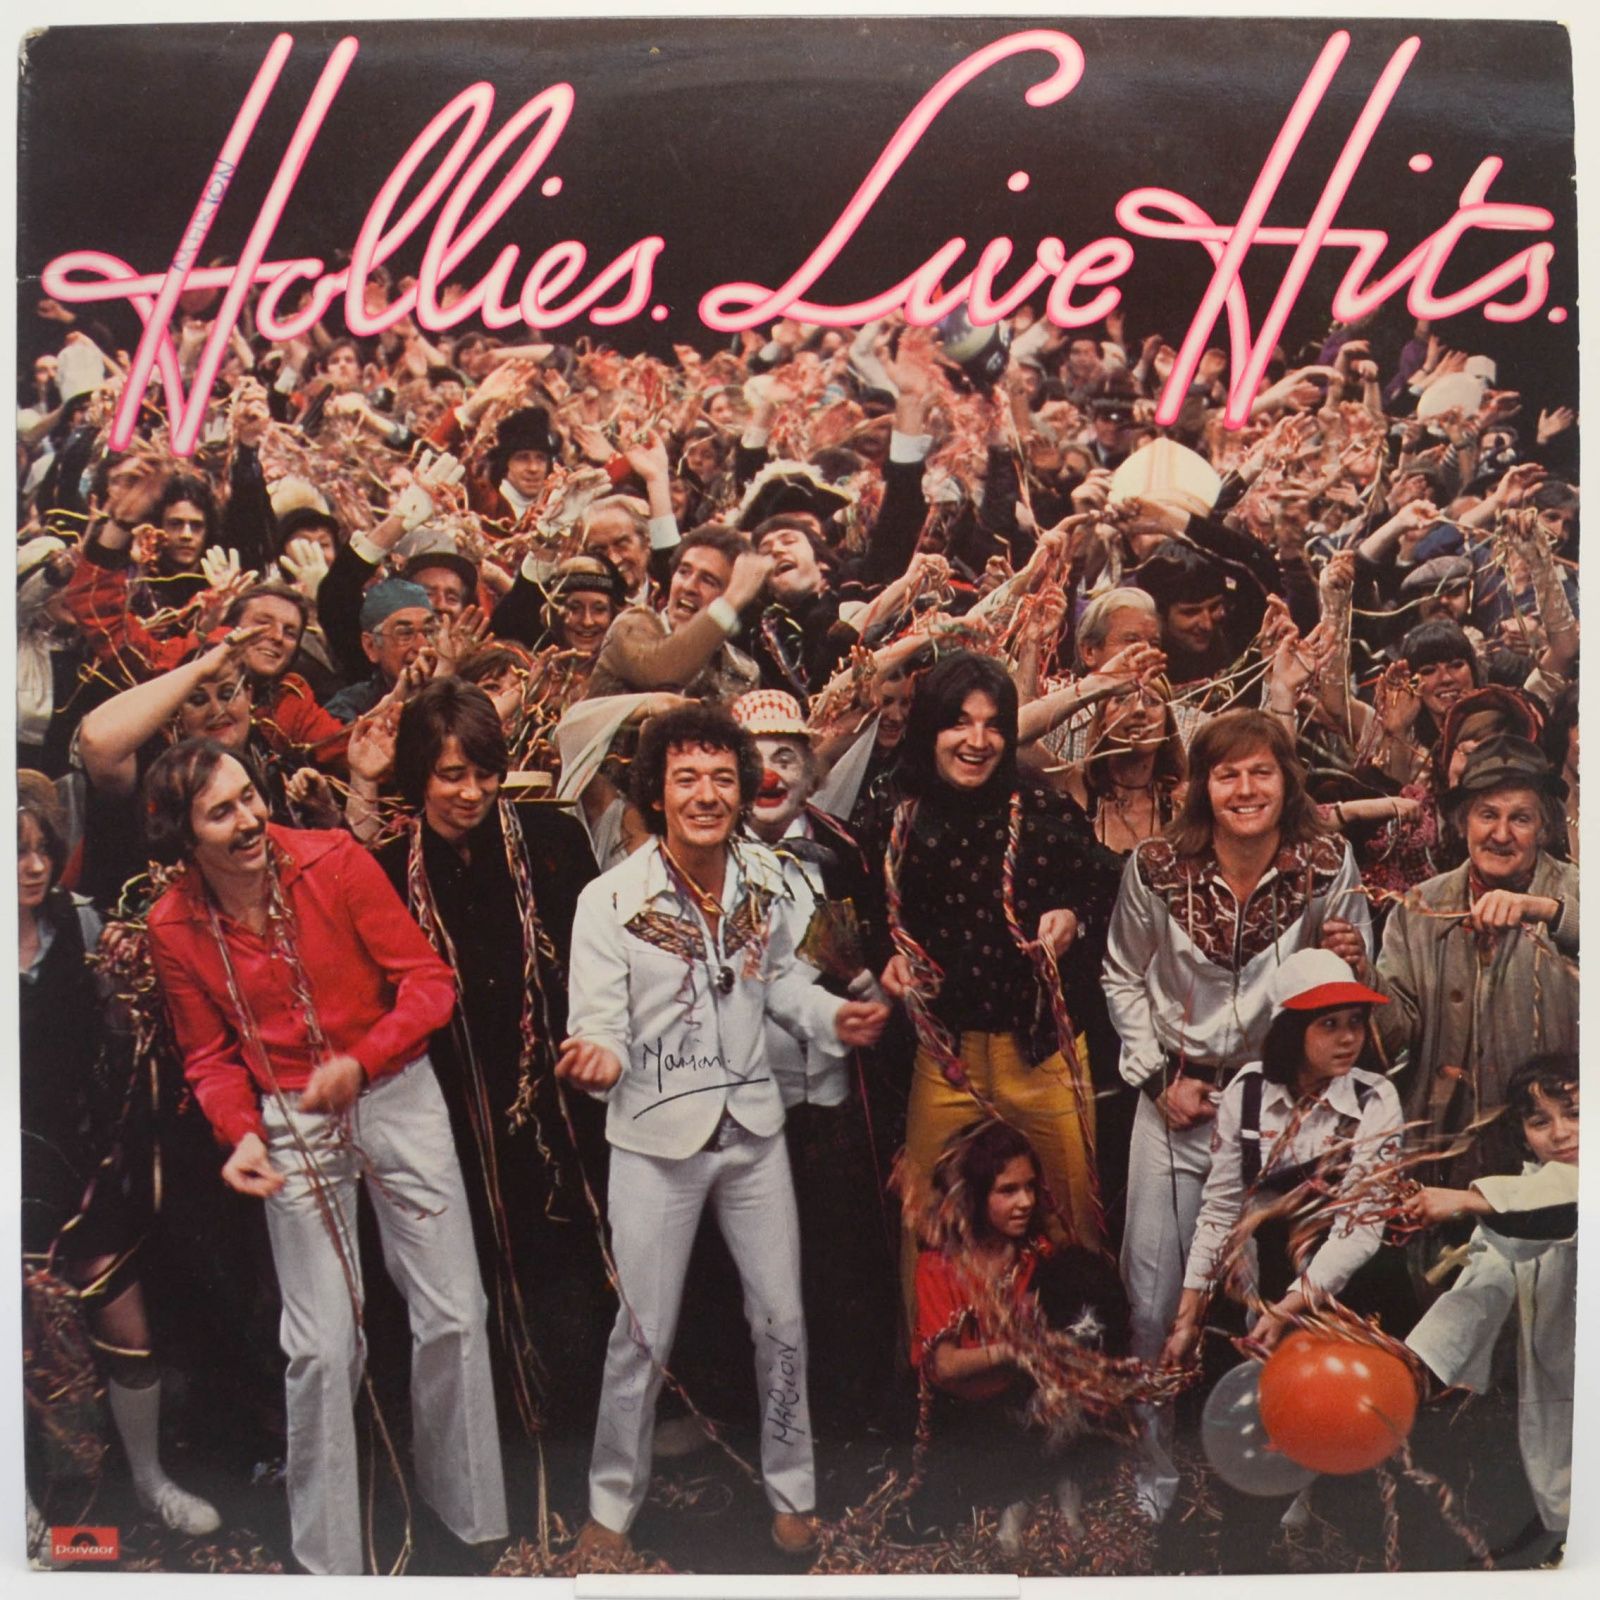 Hollies — Hollies Live Hits (UK), 1976